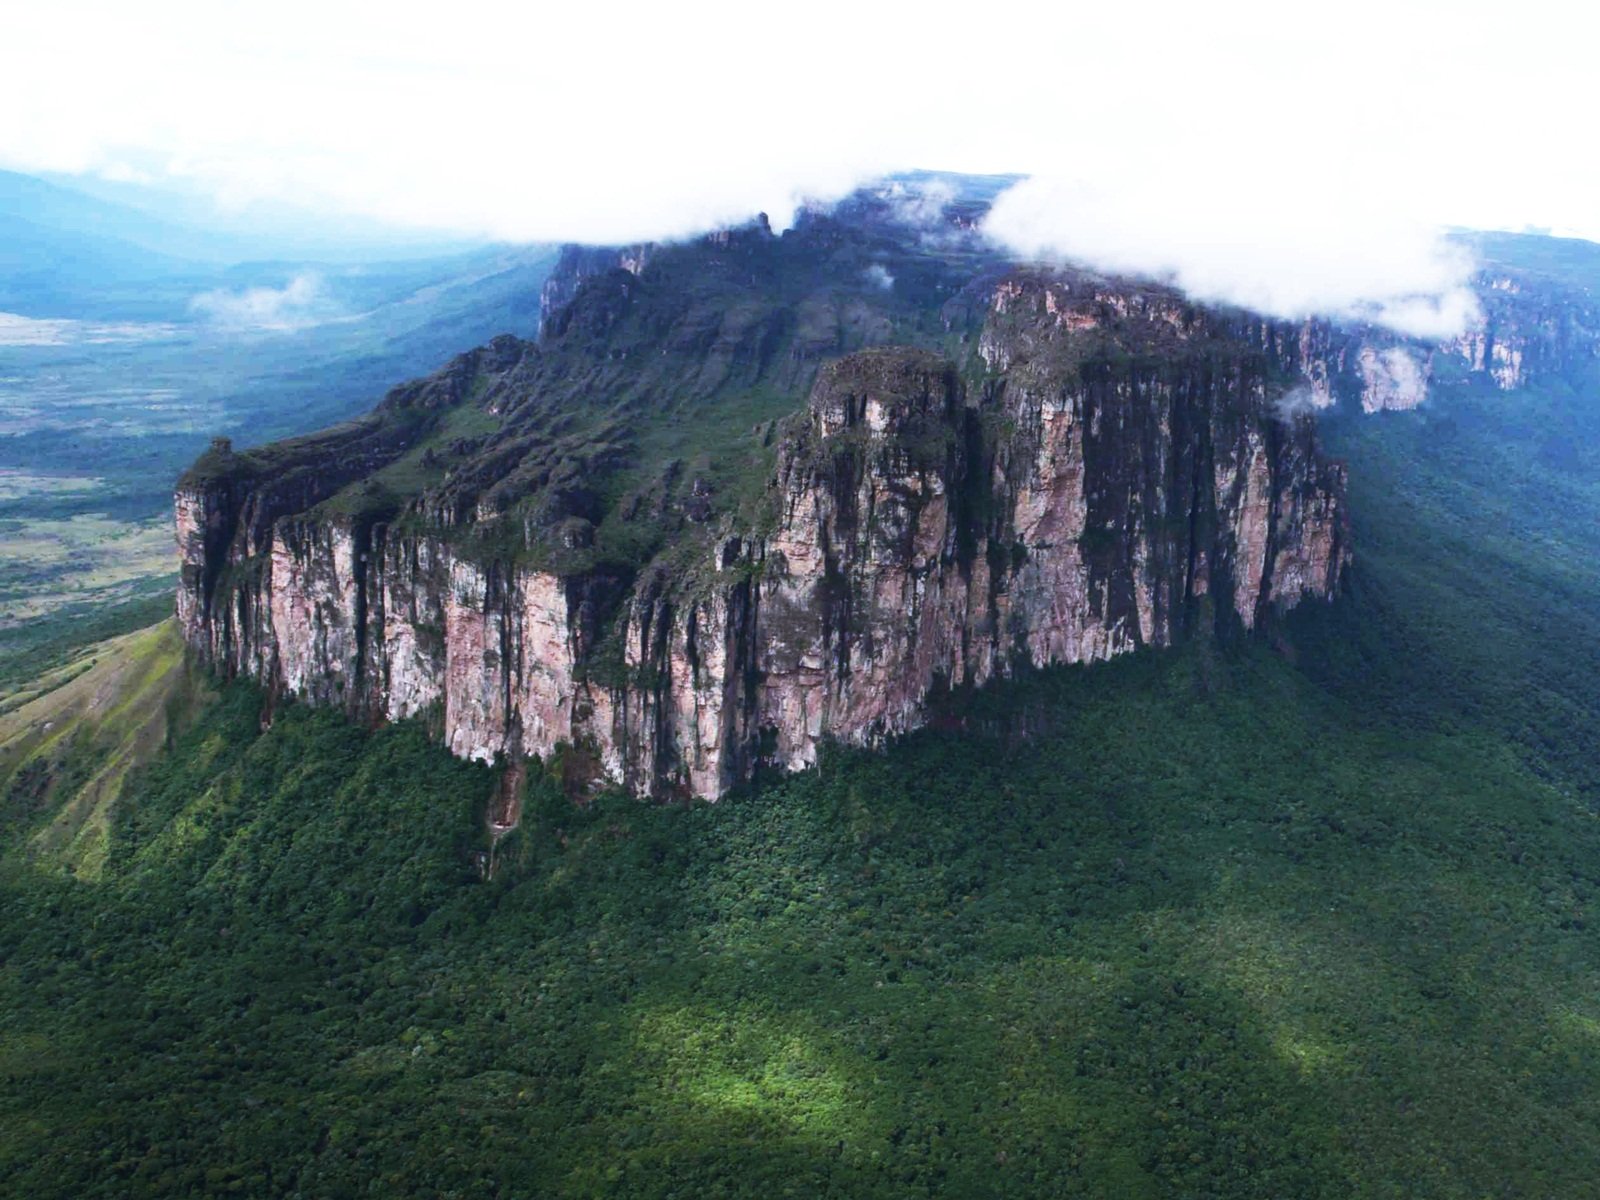 Водопад на гвианском плоскогорье. Столовая гора Рорайма. Венесуэла плато Рорайма. Столовые горы Рорайма Венесуэлы. Венесуэла горы Тепуи.